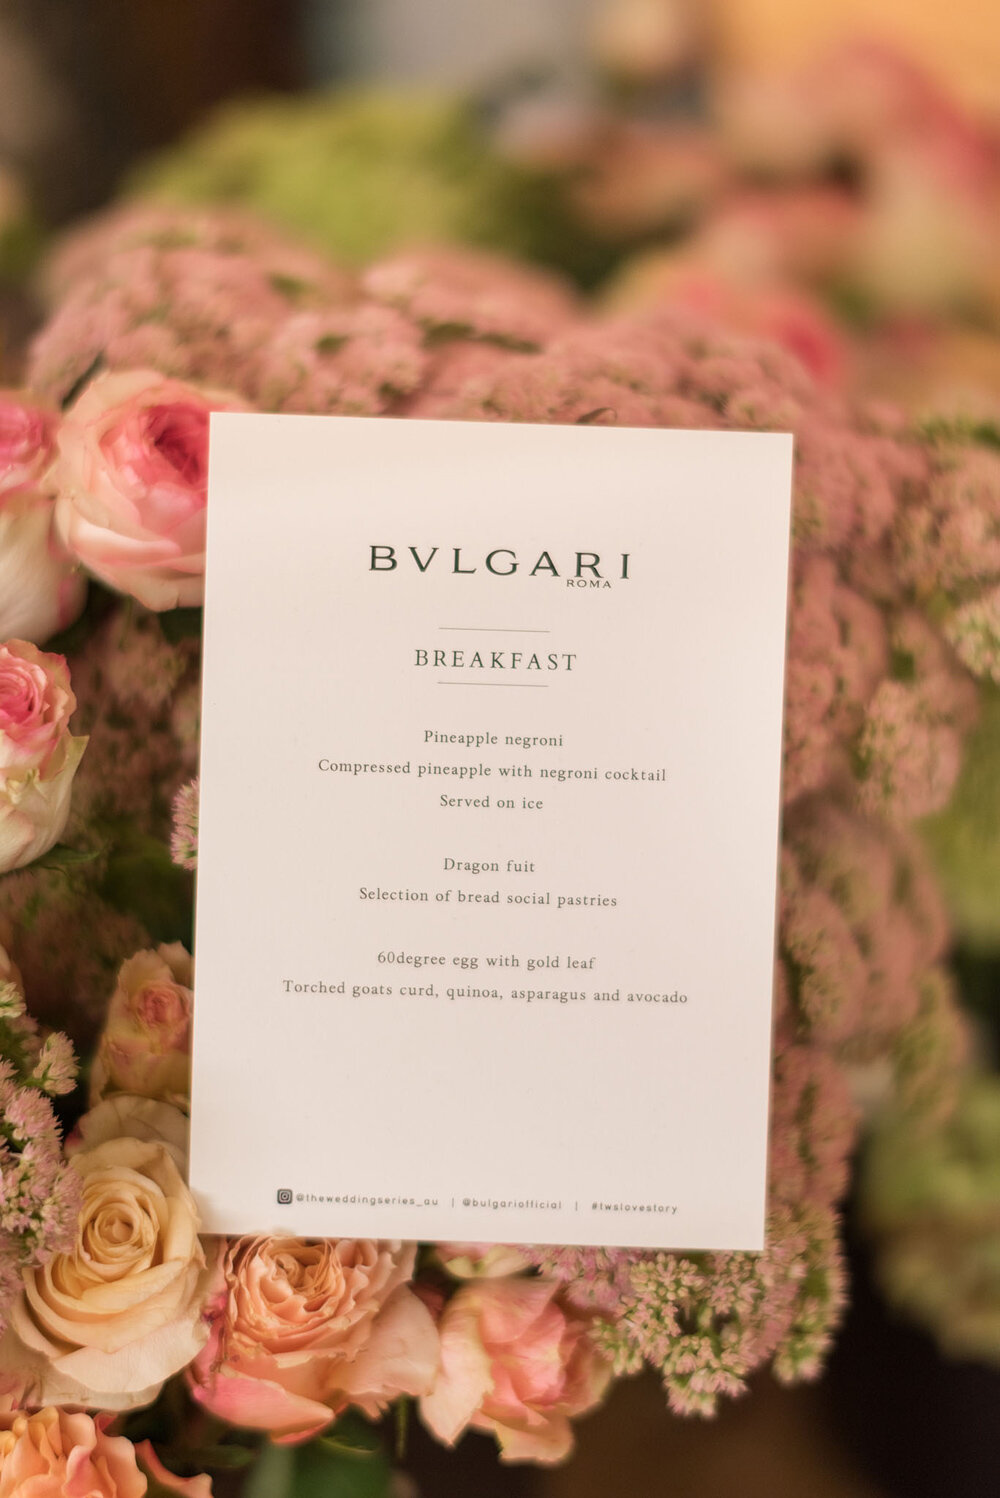 Bulgari Breakfast bespoke menu created by Joe Chef, Byron Bay